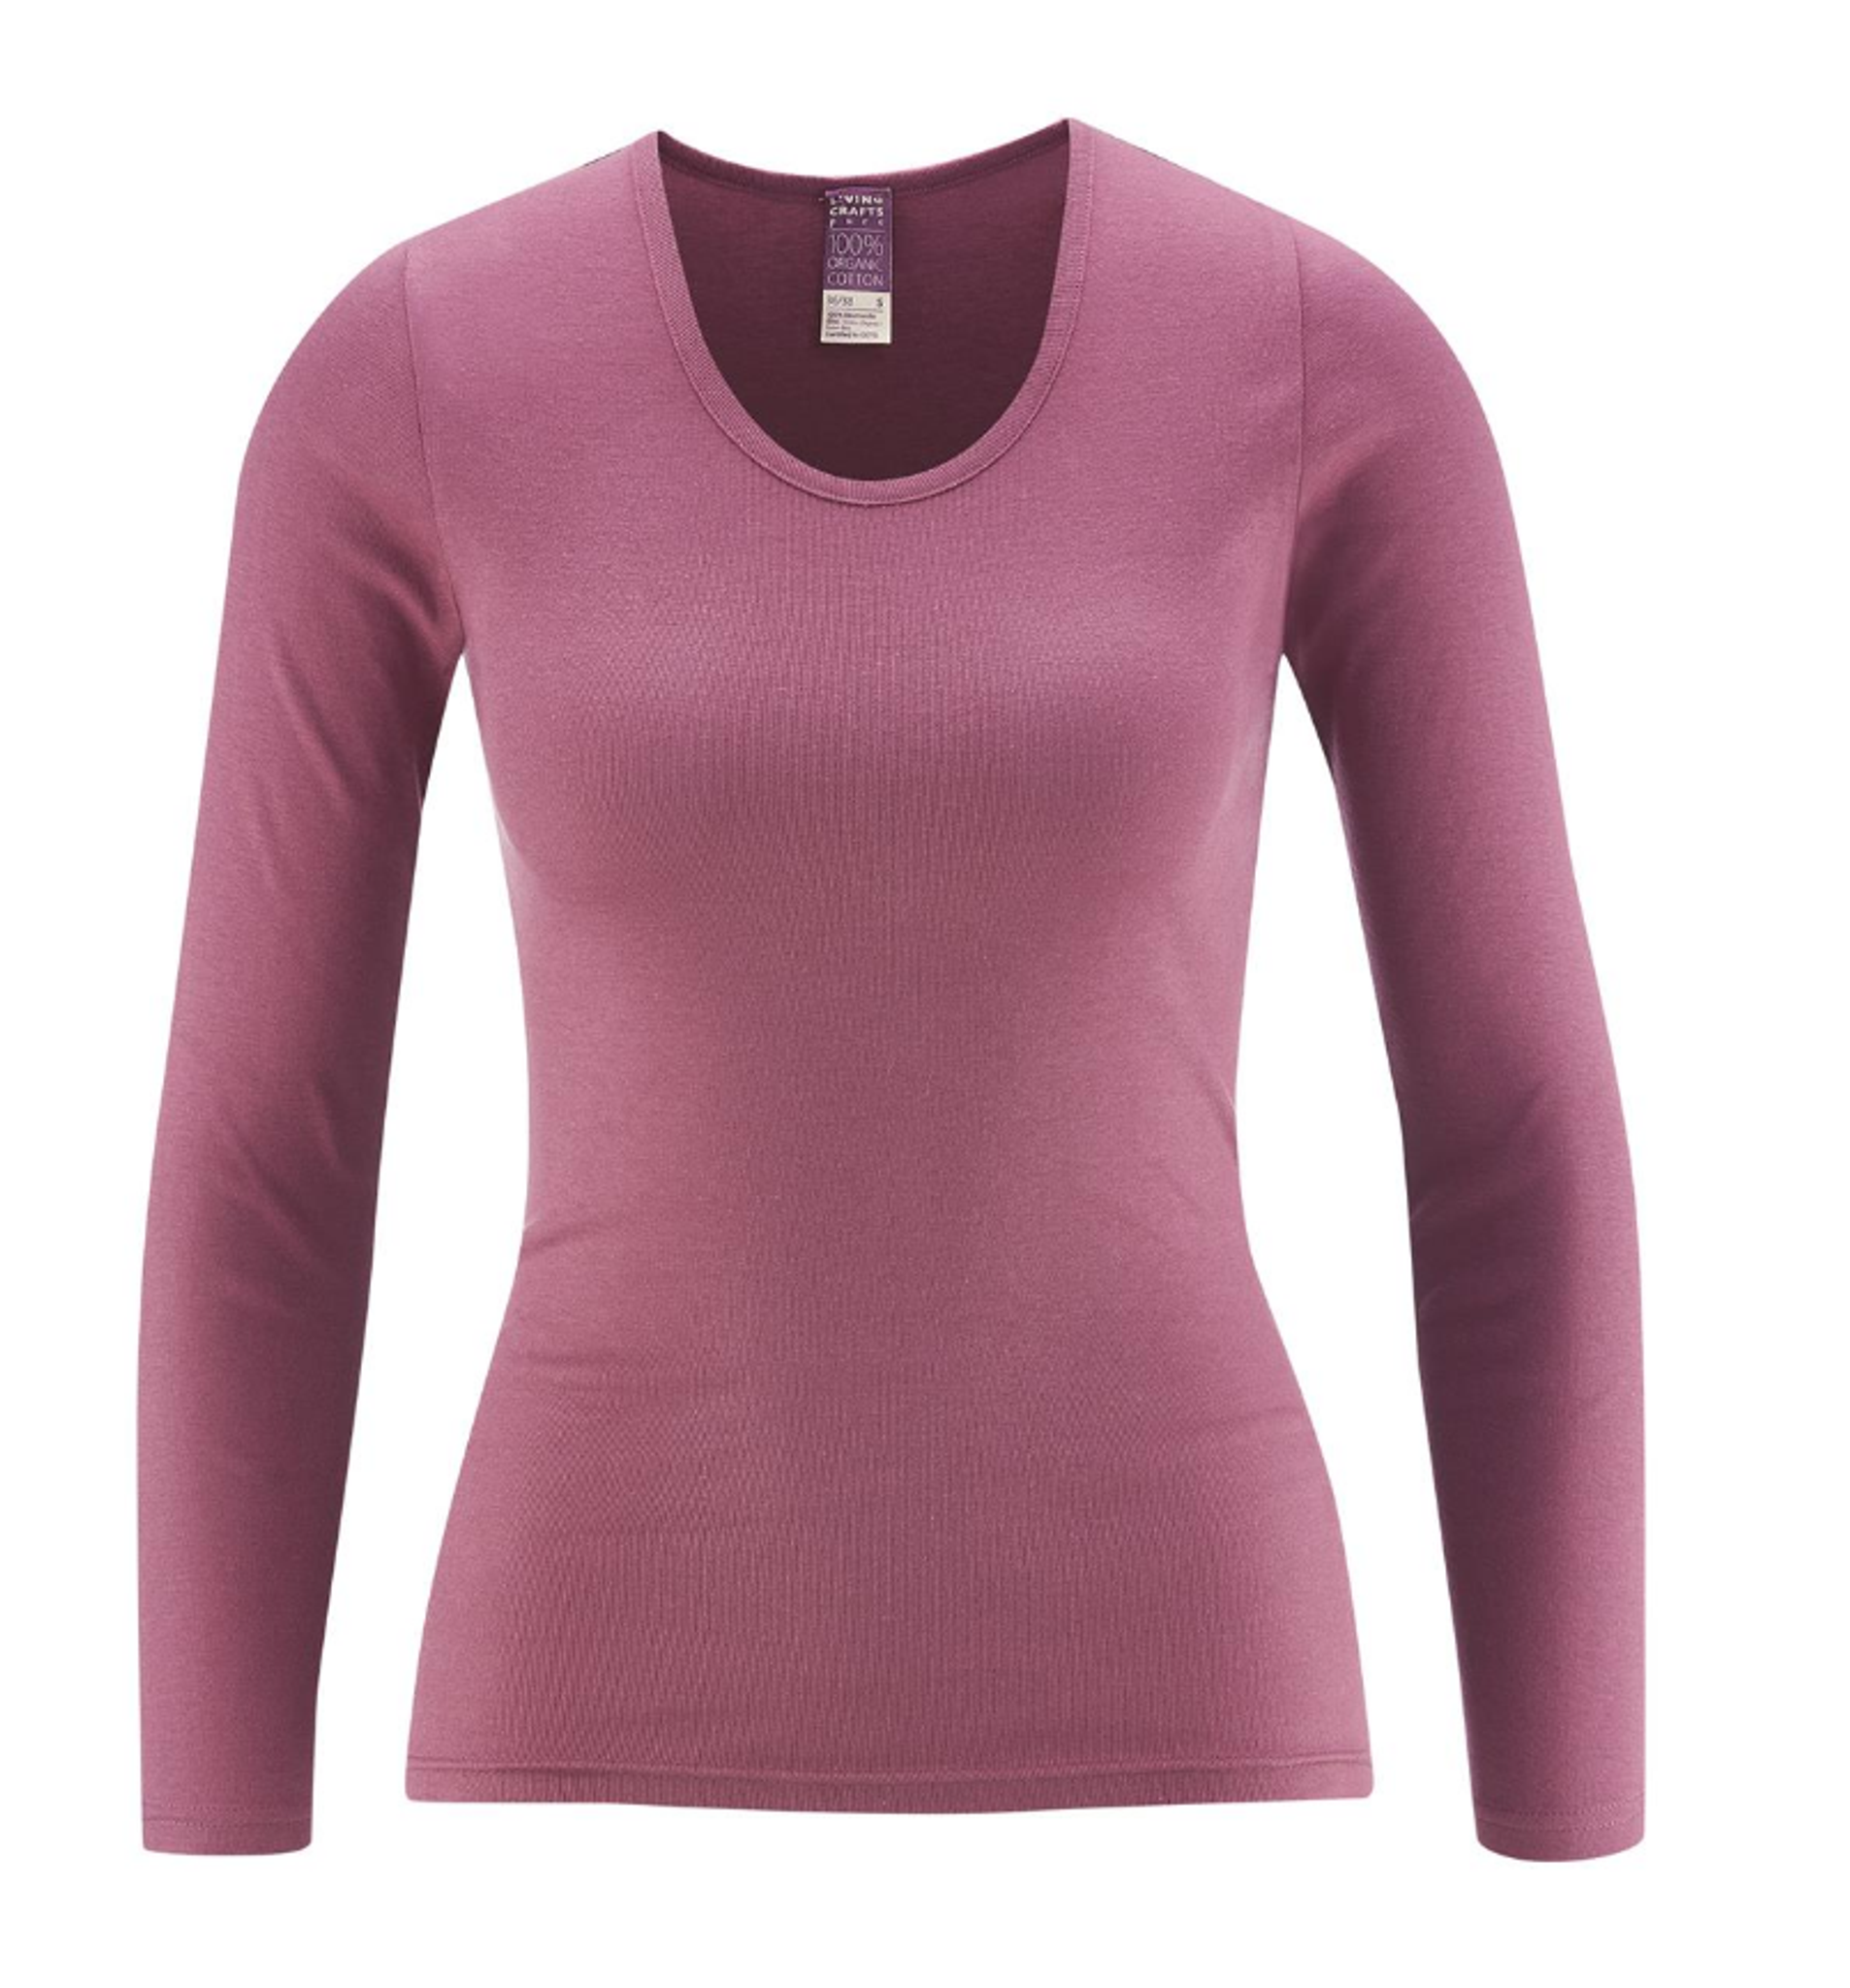 Women's Organic Cotton Long Sleeved Shirt | Living Crafts 4359